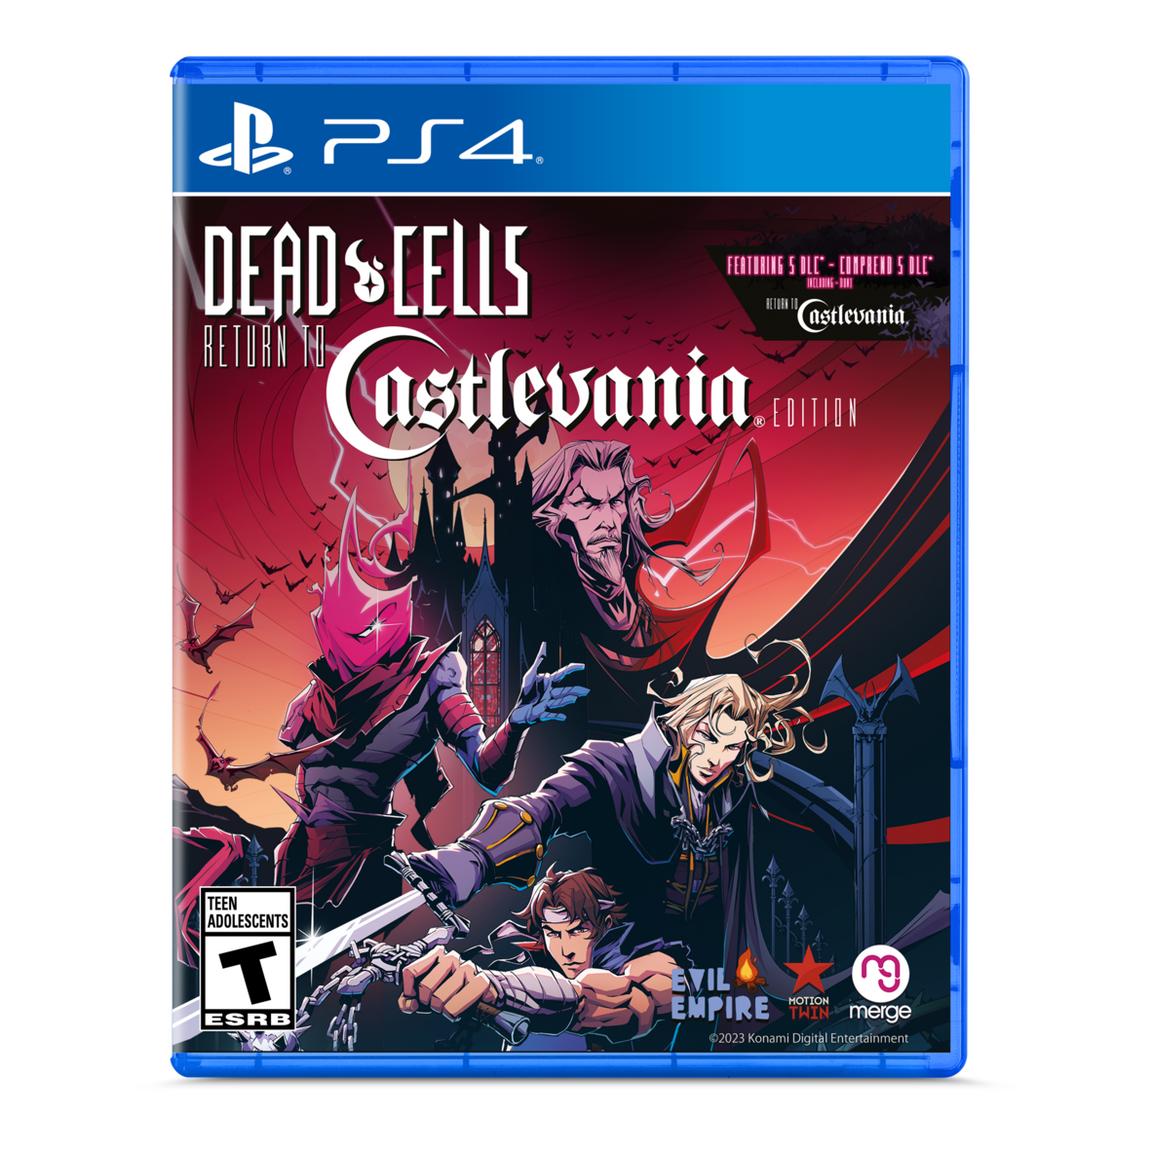 Видеоигра Dead Cells: Return to Castlevania Edition - PlayStation 4 цена и фото